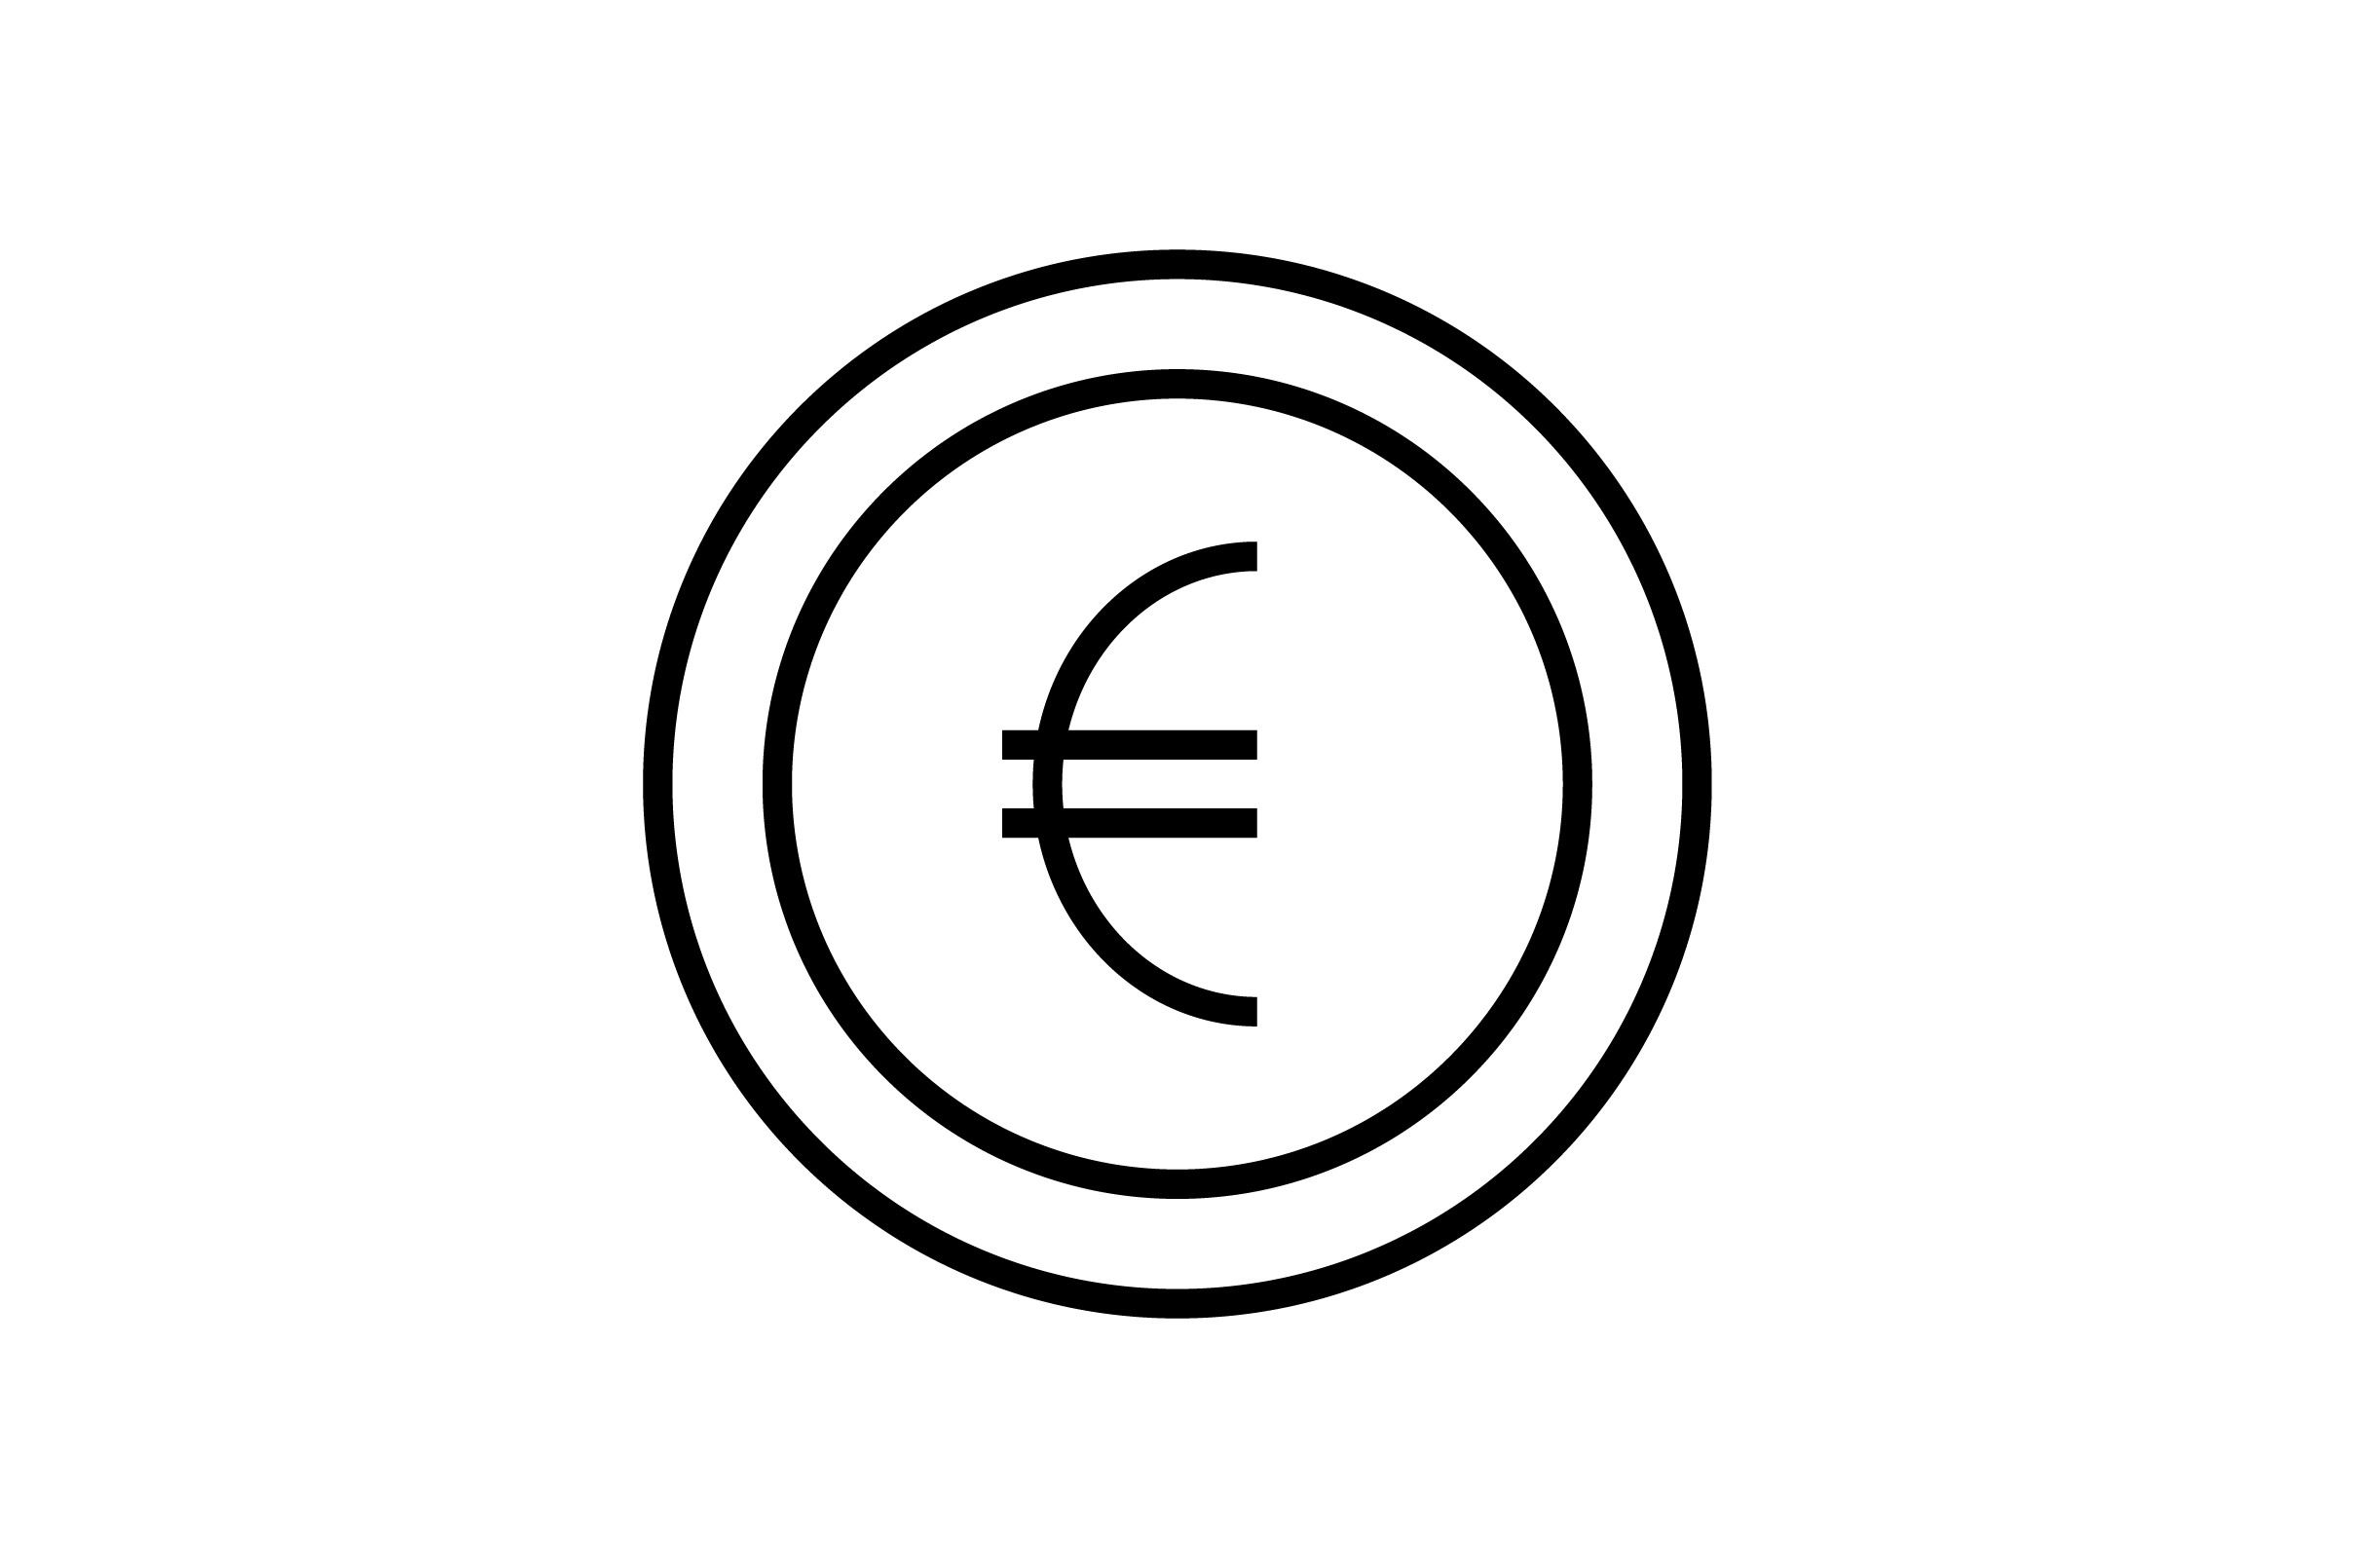 Euro Line Art Vector Icon Graphic by riduwanmolla · Creative Fabrica